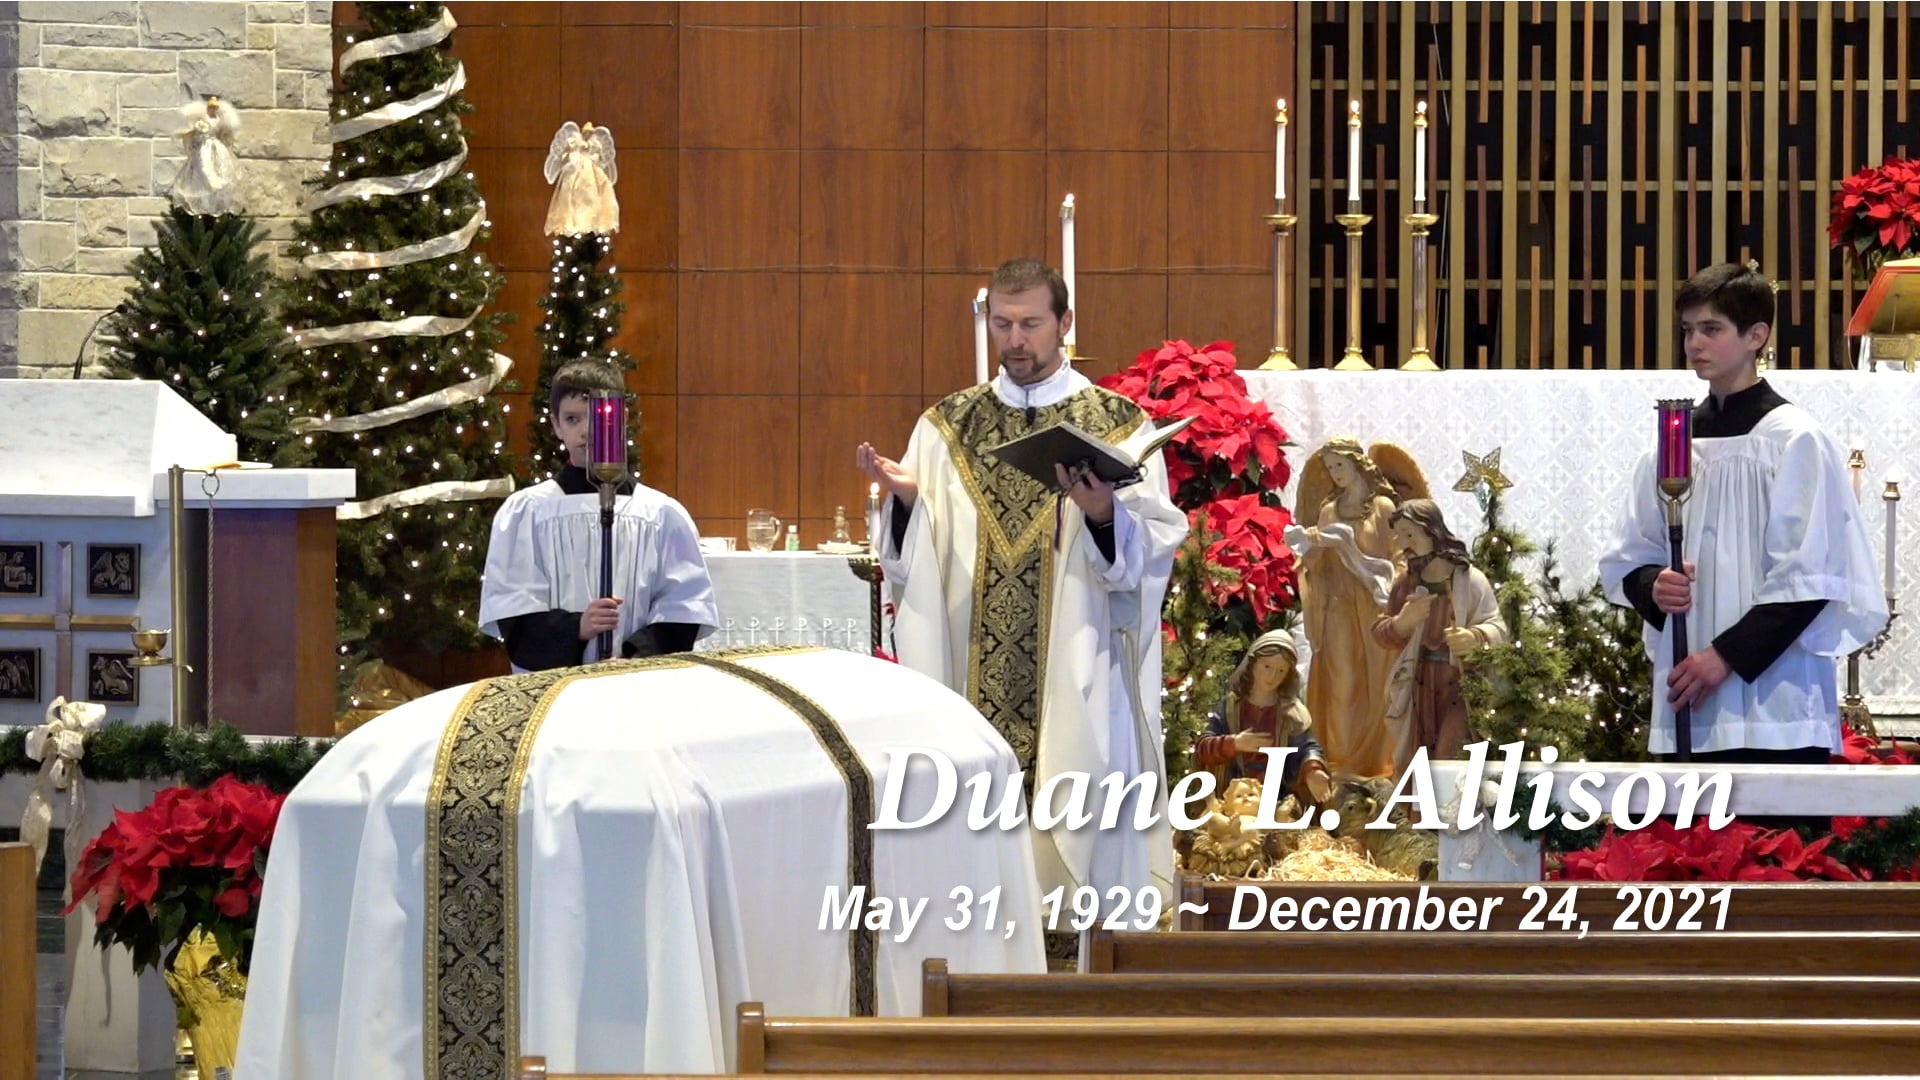 Funeral Mass for Duane Allison